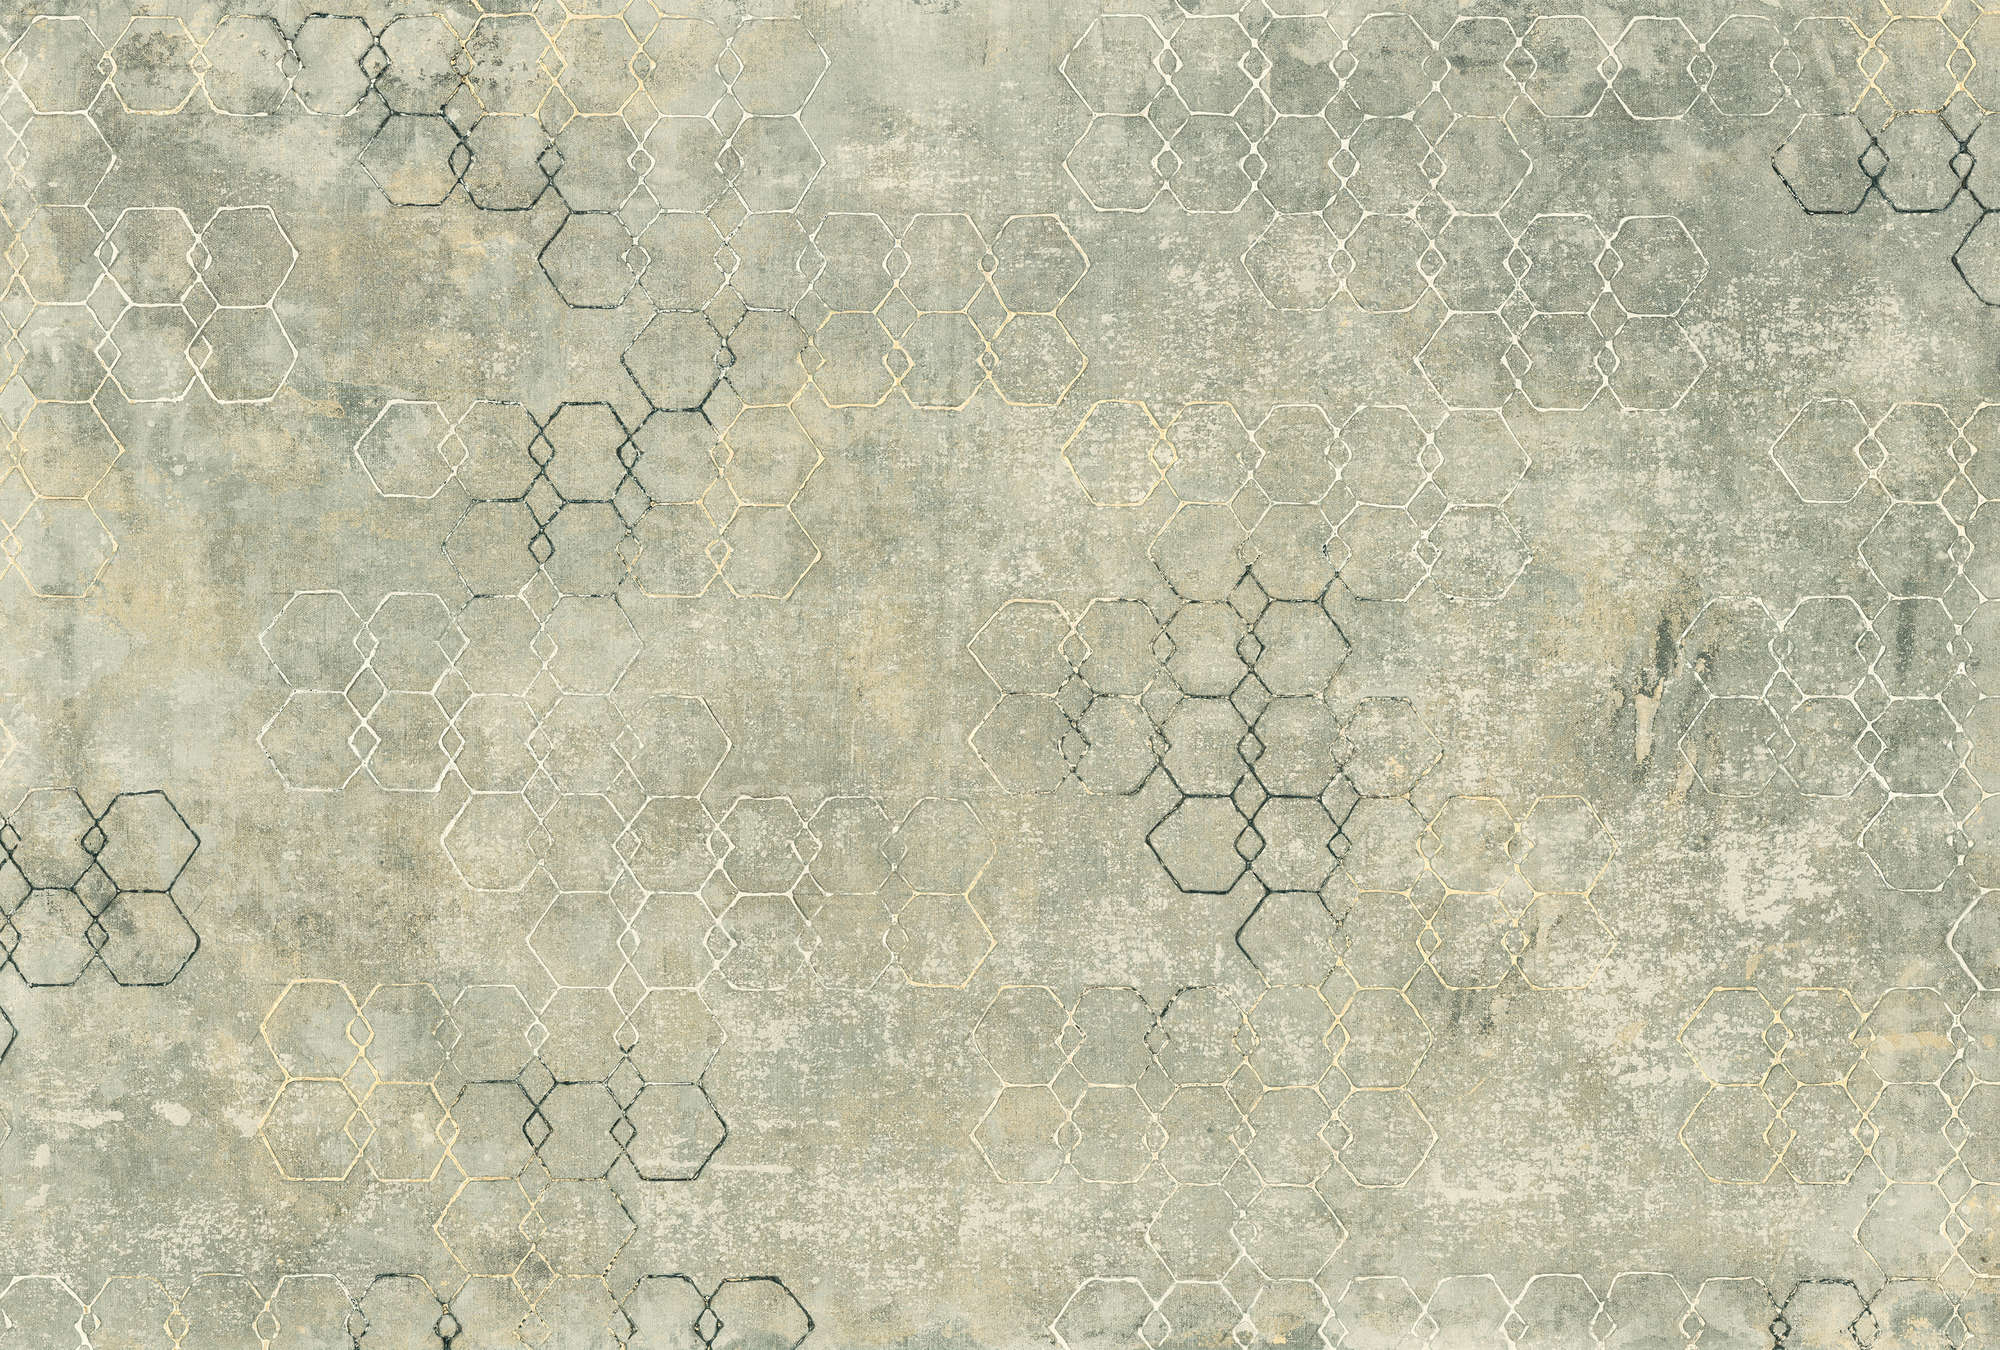             Papier peint béton avec design hexagonal & used look - vert, blanc, beige
        